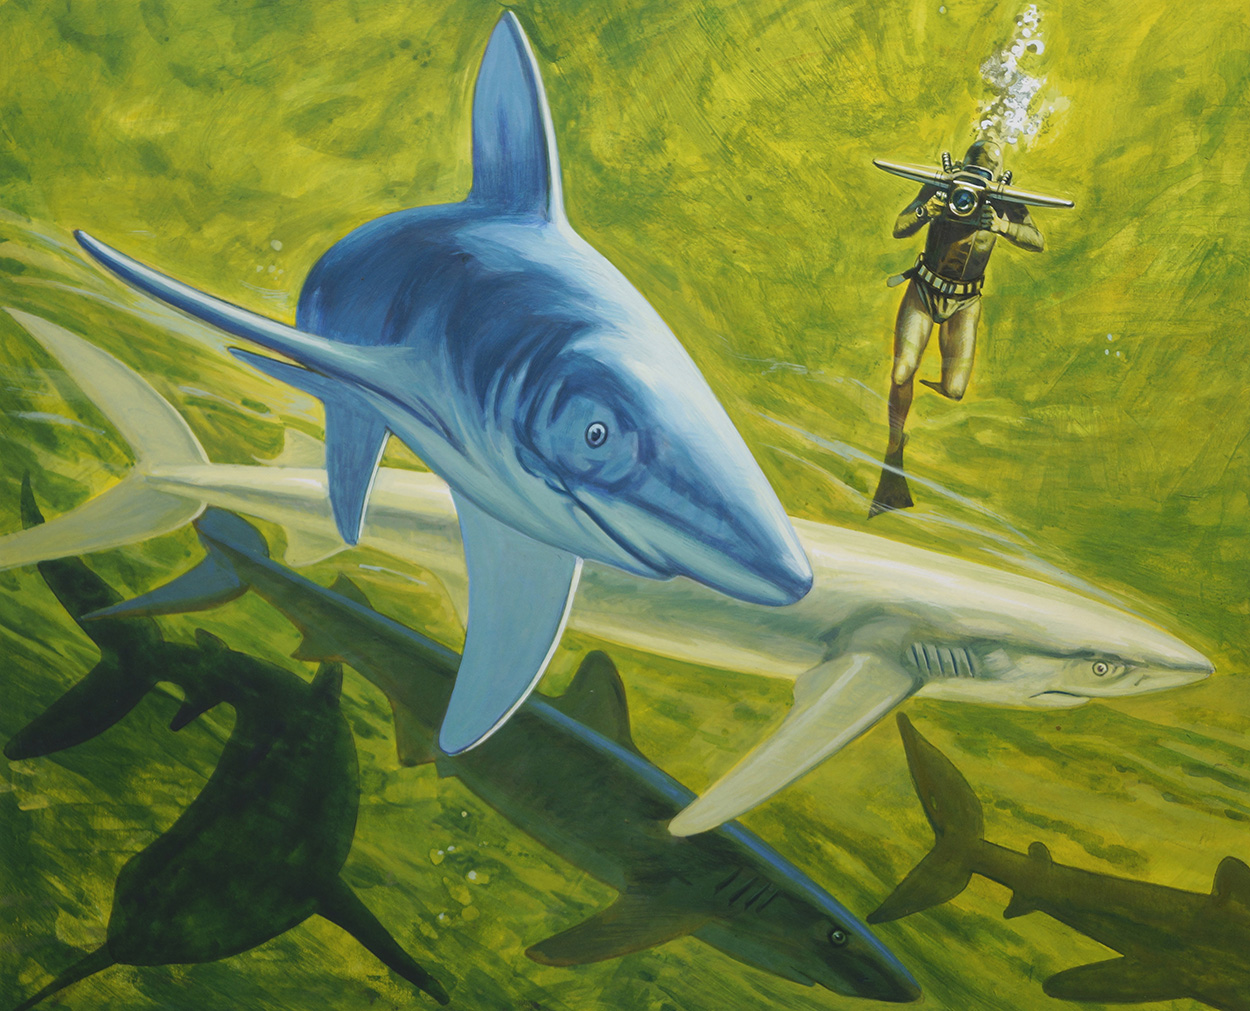 School of Sharks (Original) art by Andrew Howat at The Illustration Art Gallery